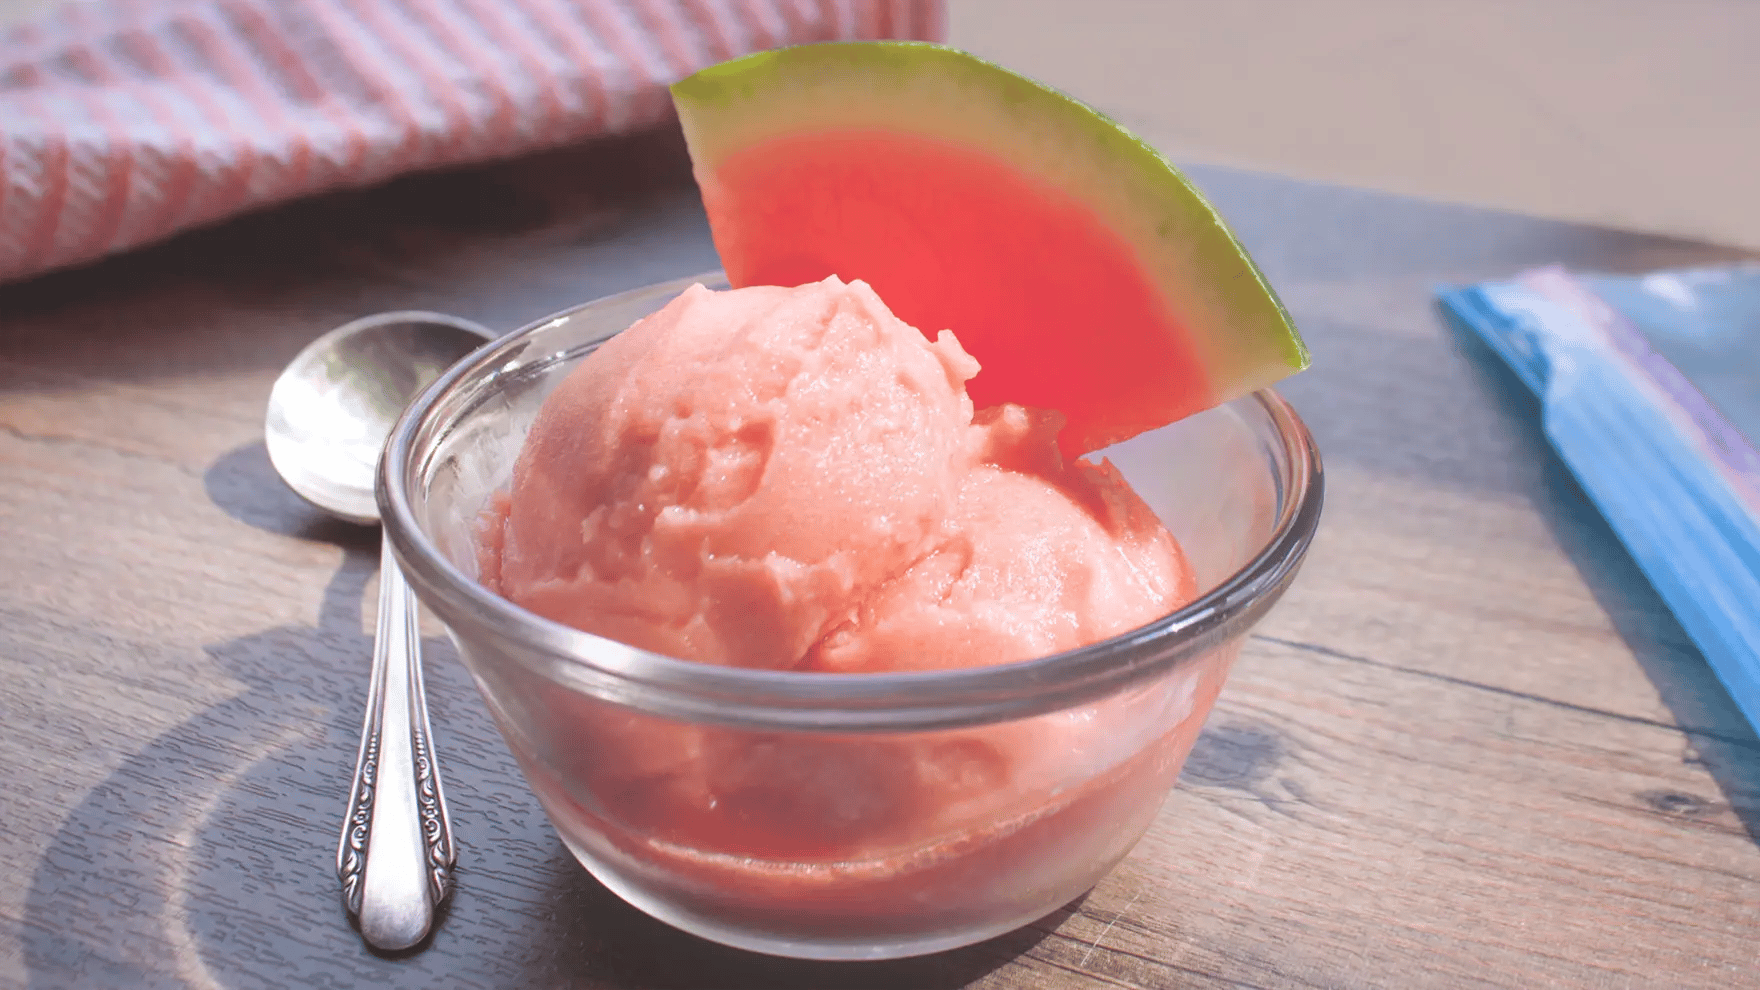 Watermelon sorbet in a glass dish.